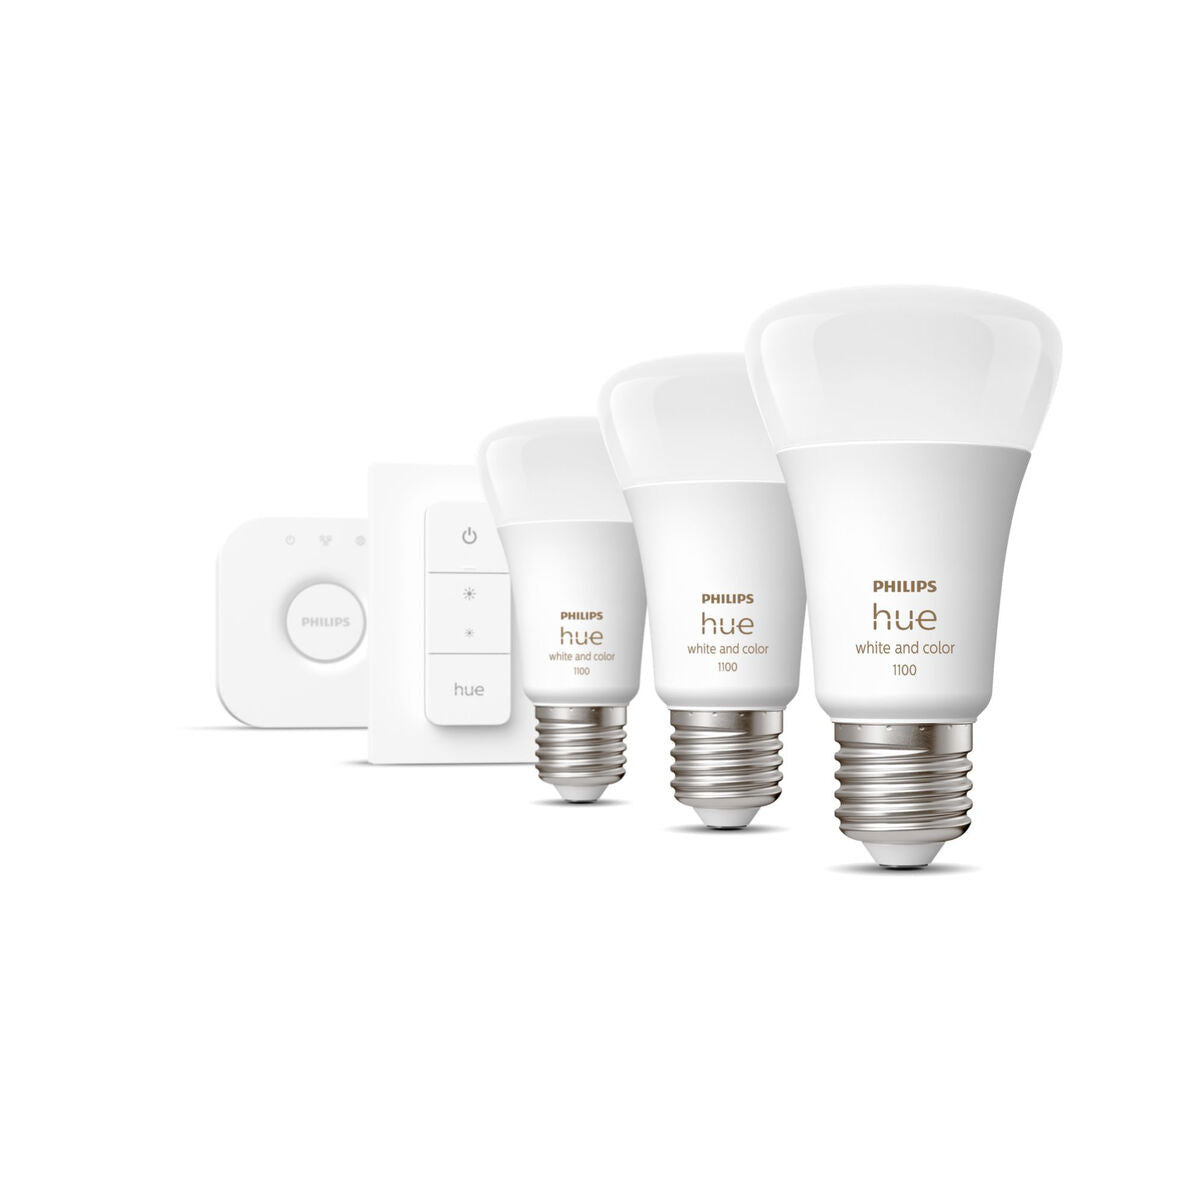 LED lamp Philips Kit de inicio E27 White F 9 W E27 806 lm (6500 K)